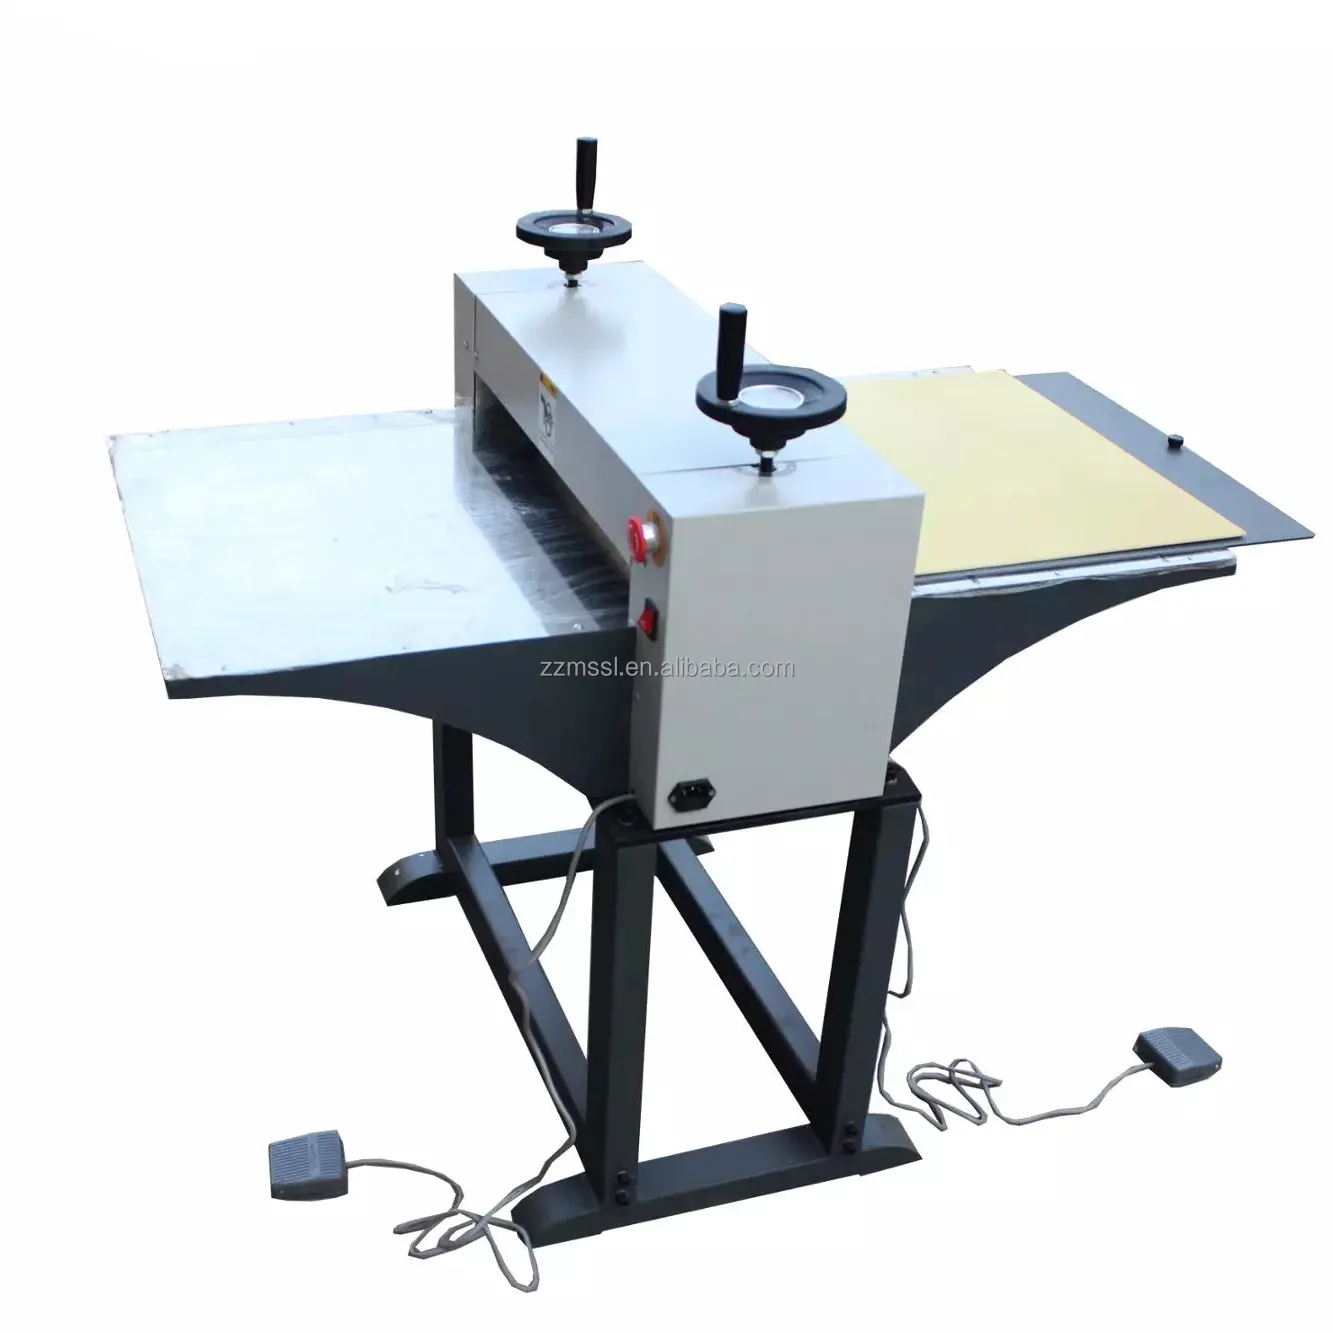 Mesin kemasan Manual mesin pemotong kotak piza presisi tinggi